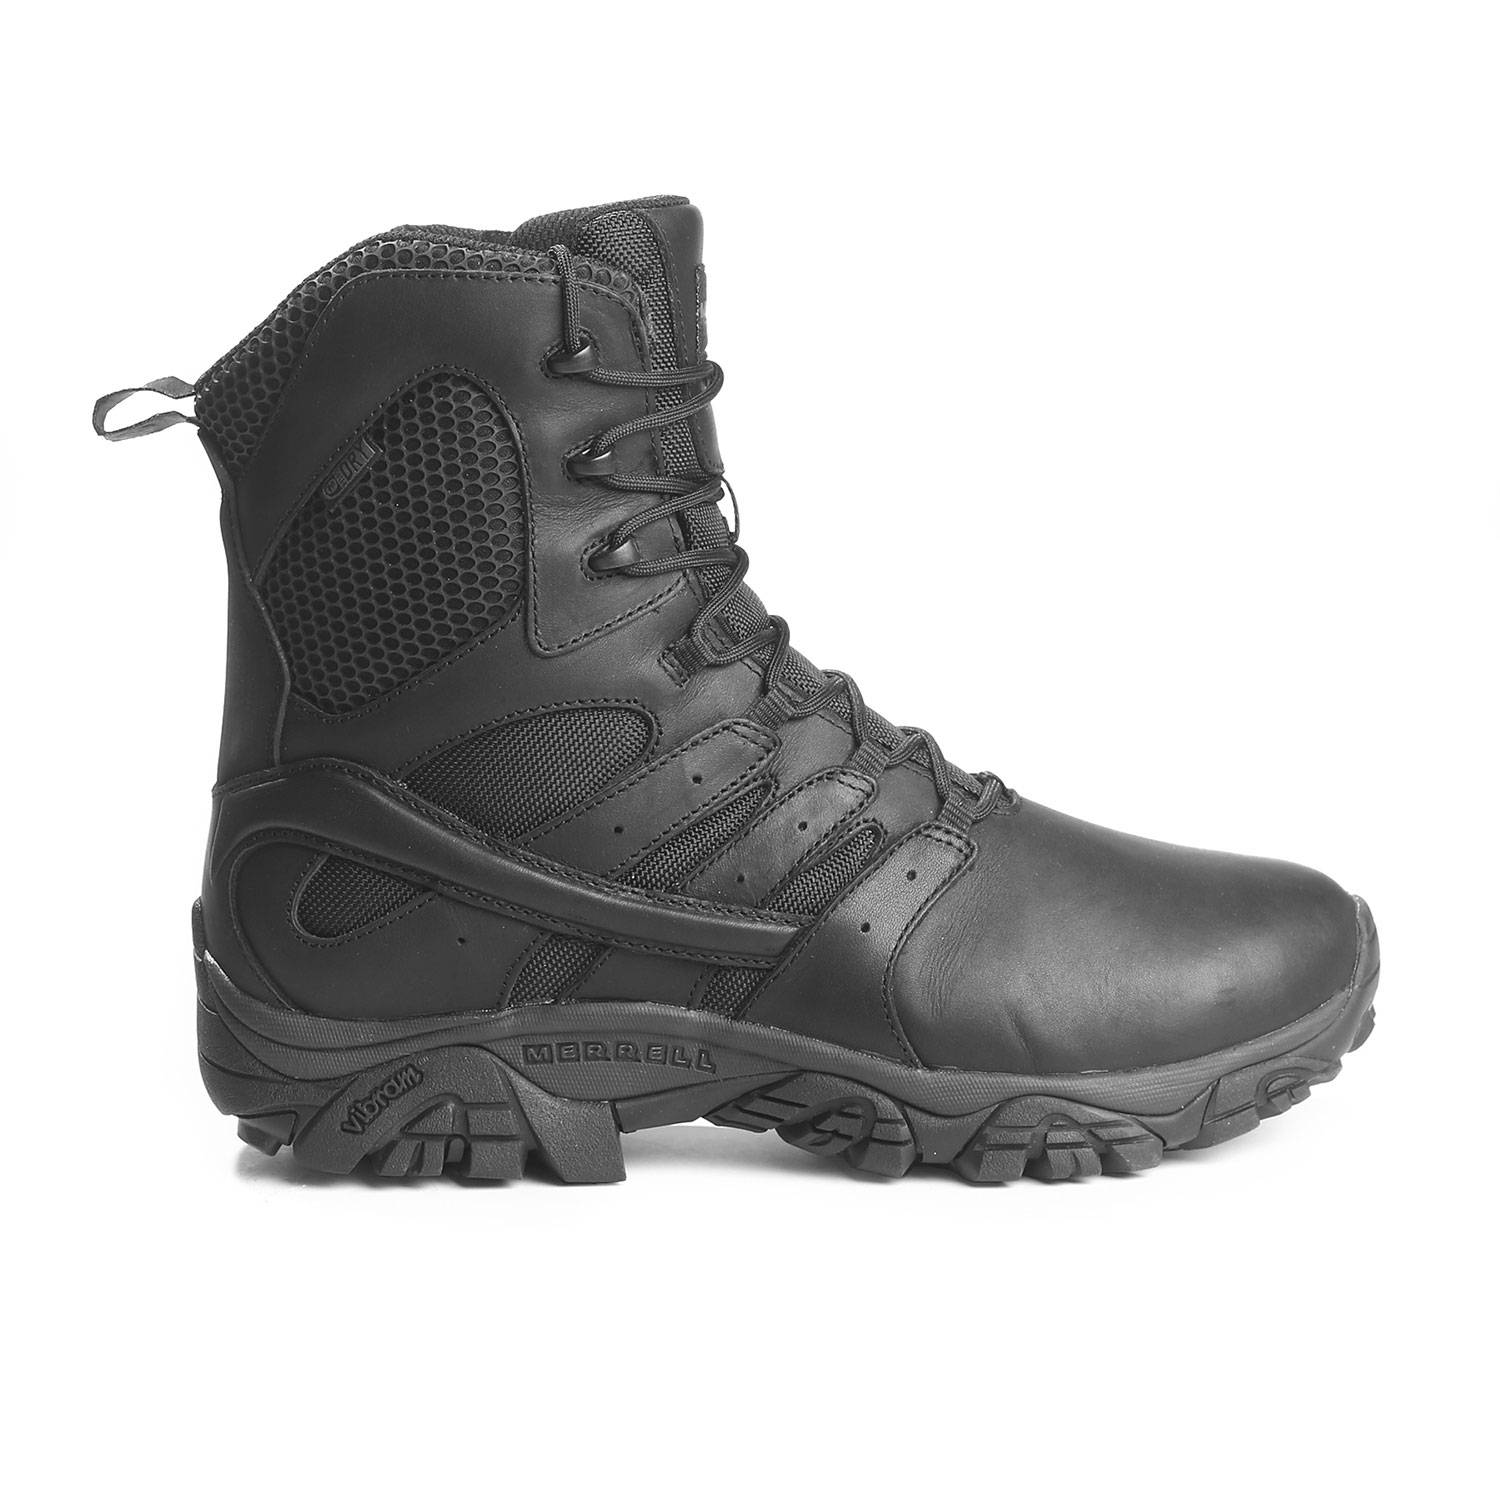 Merrell Men's MOAB 2 8" Tactical Response Waterproof Boots